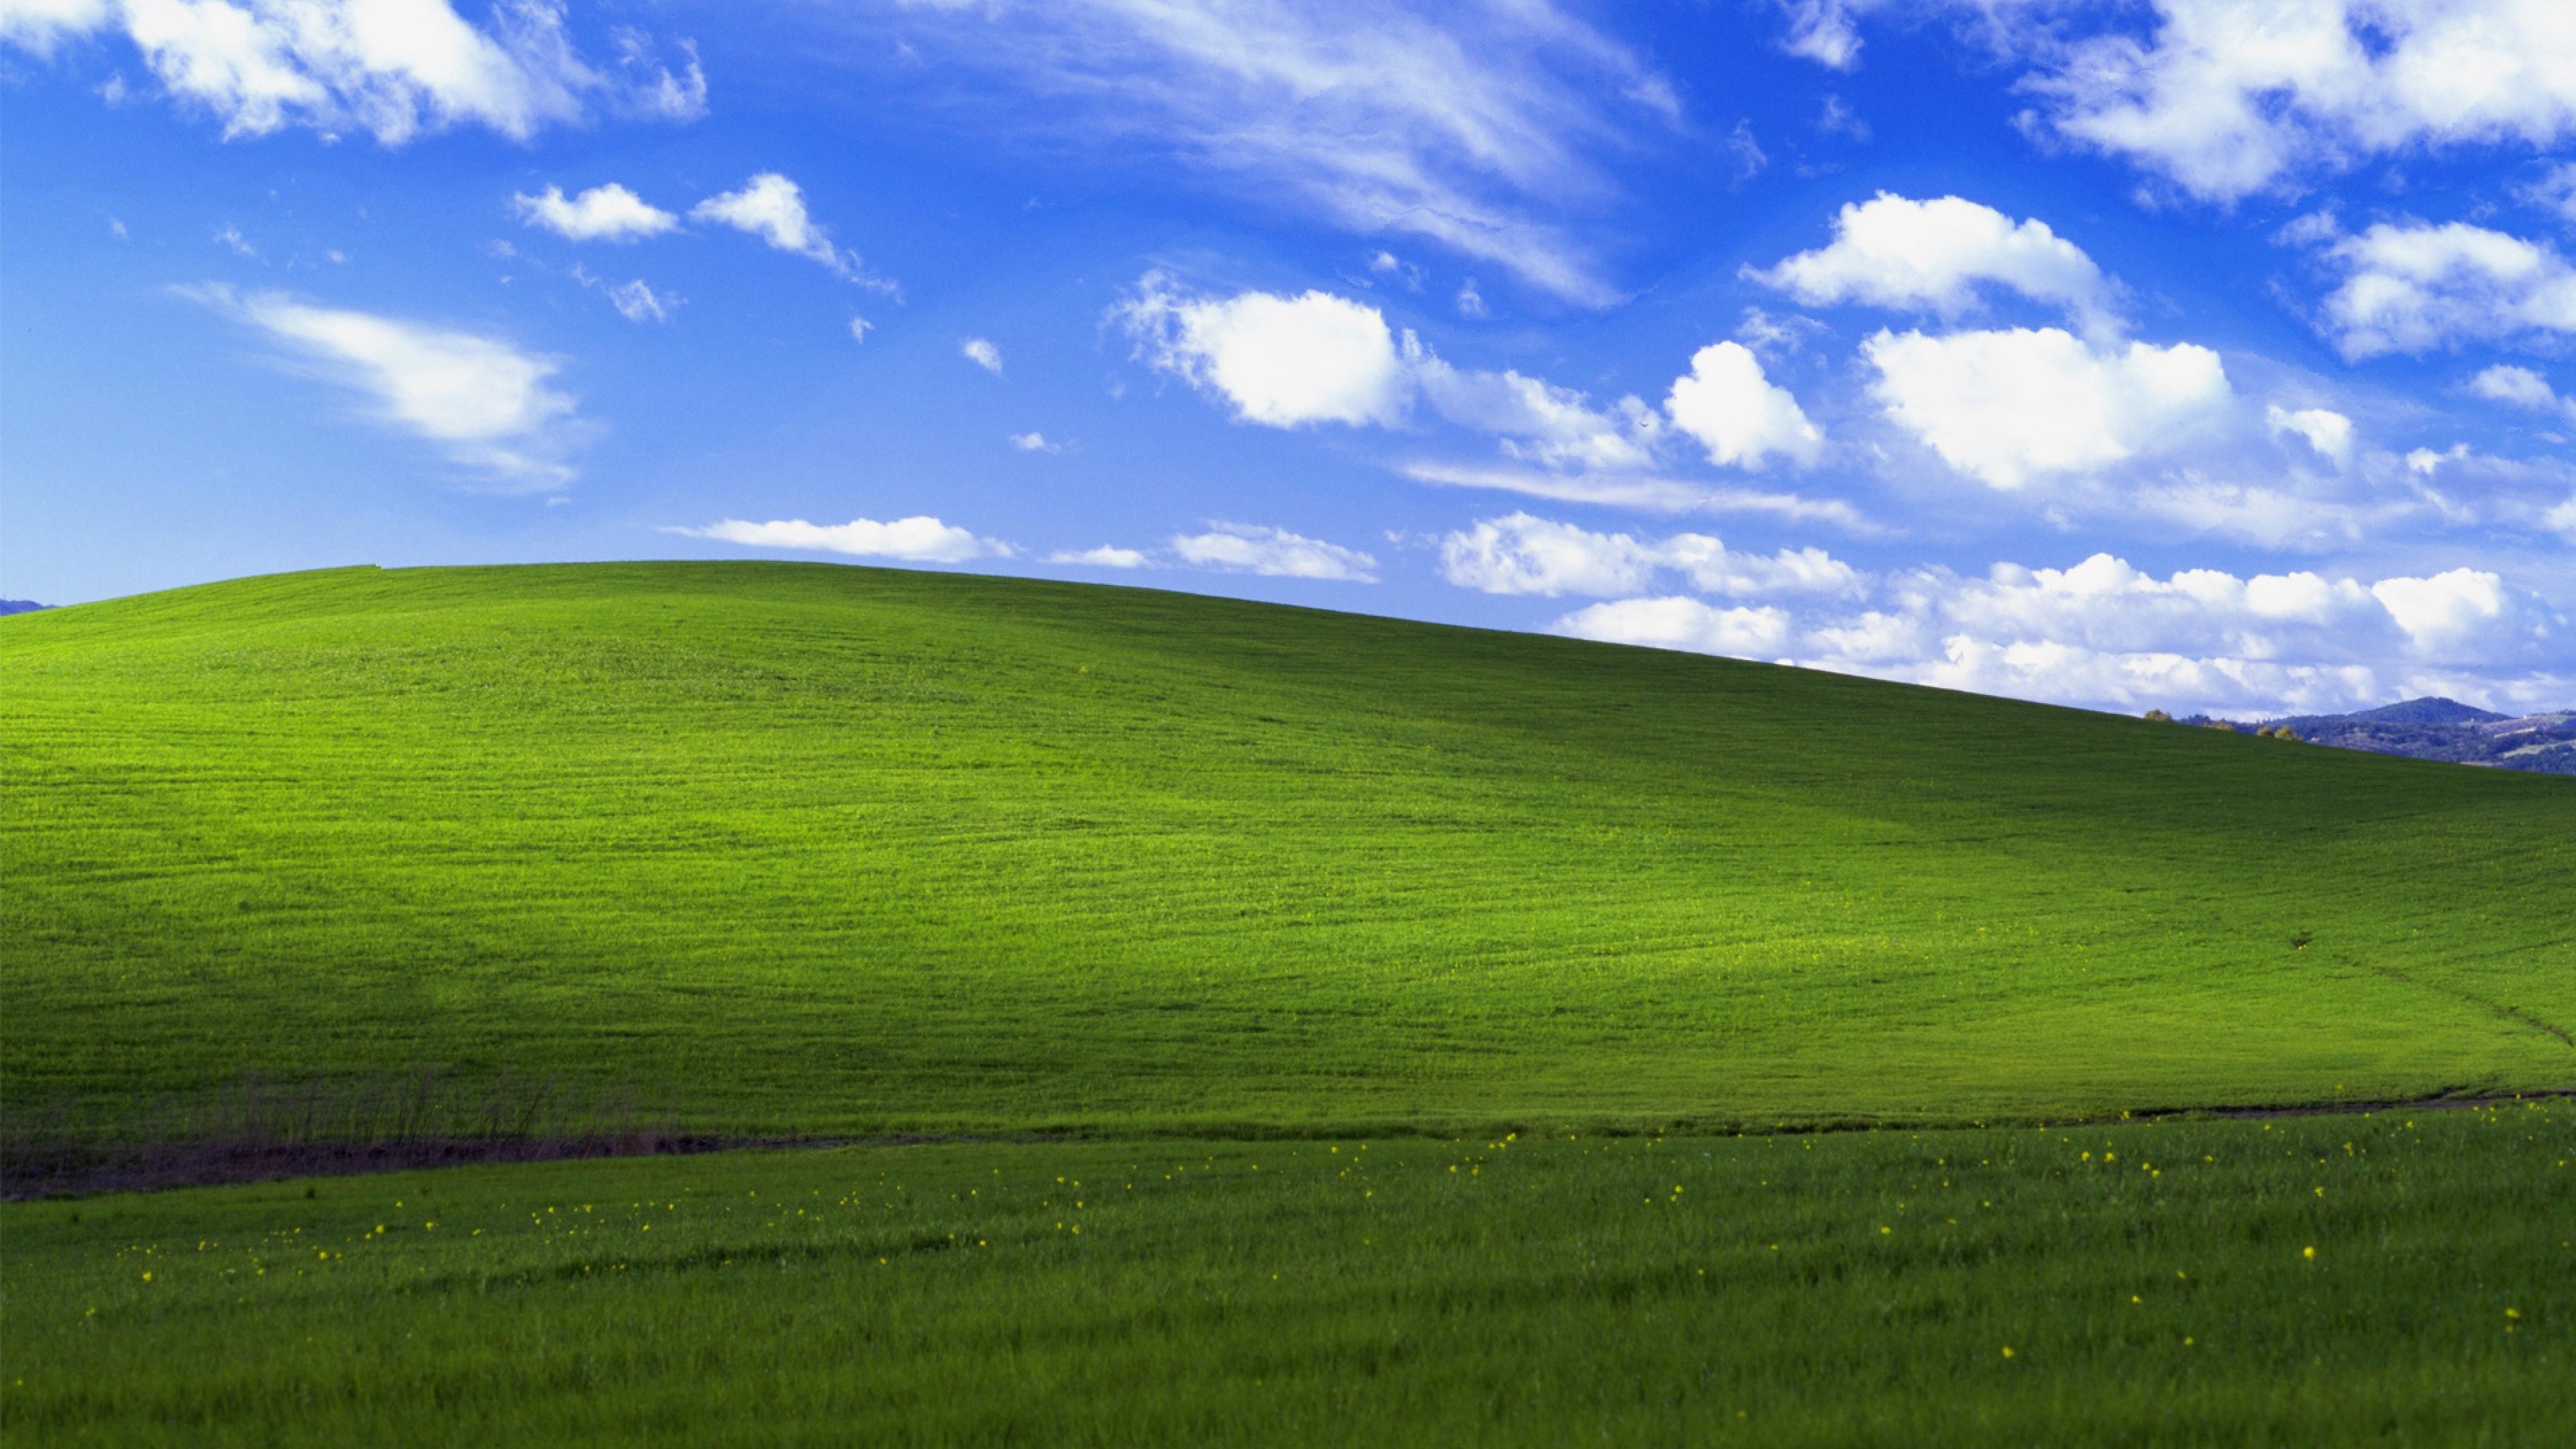 Windows desktop background pictures